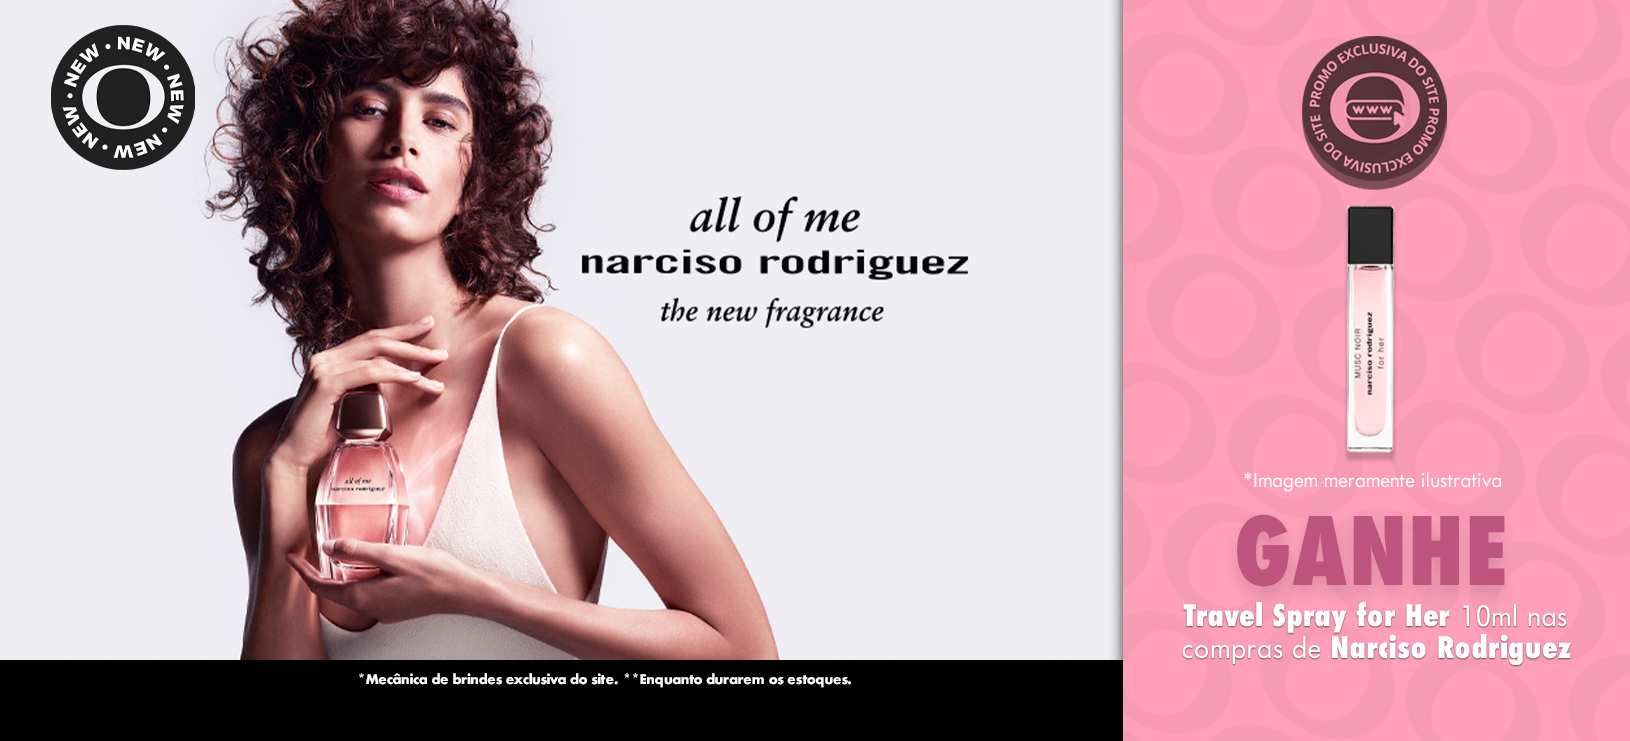 narciso-rodriguez-all-of-me-banner-desktop